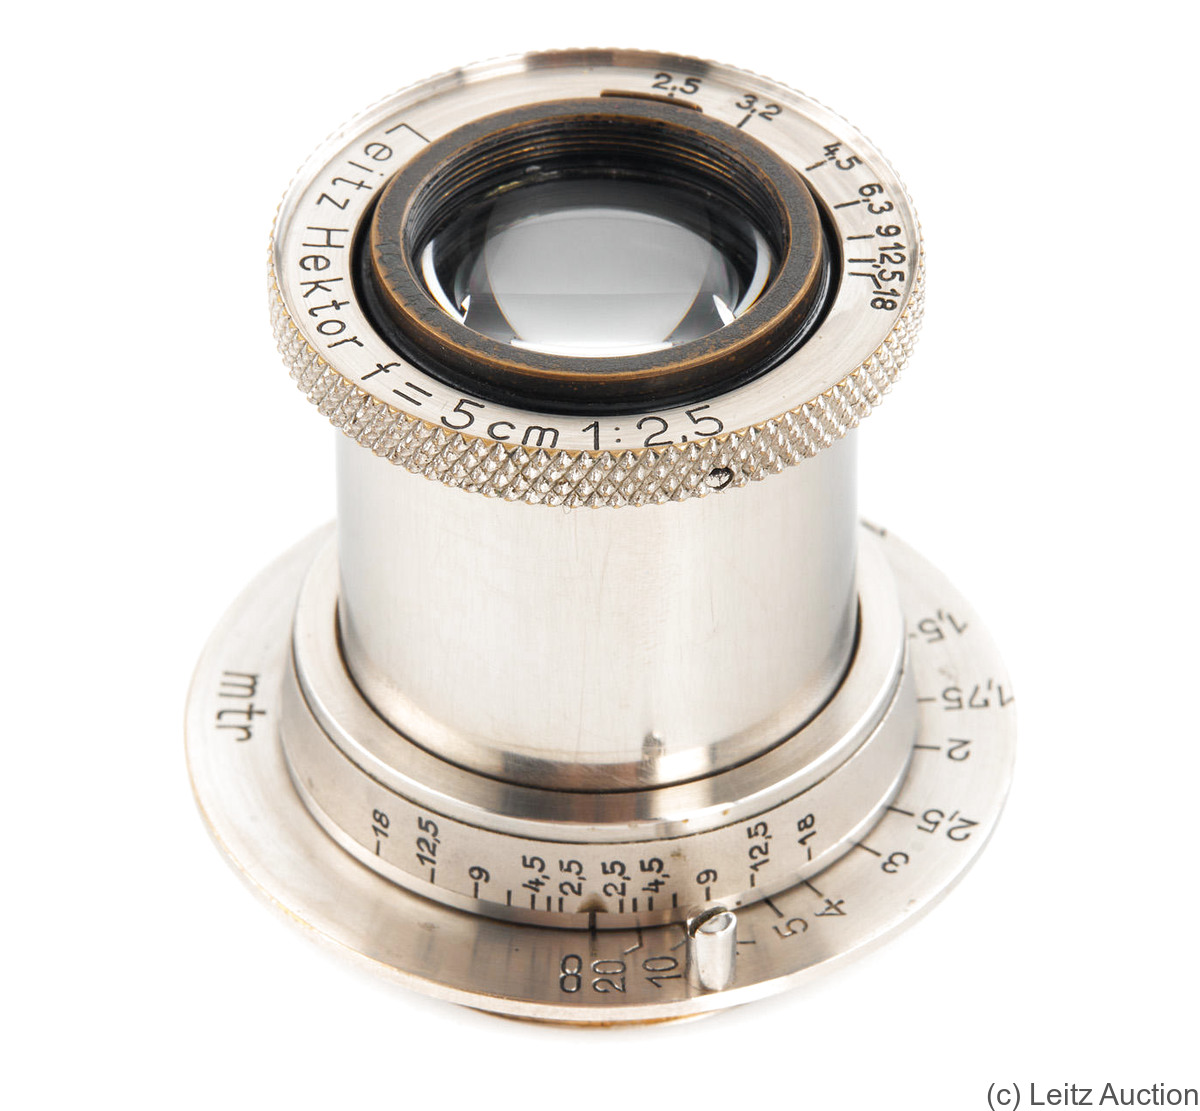 Leitz: 50mm (5cm) f2.5 Hektor (SM) camera